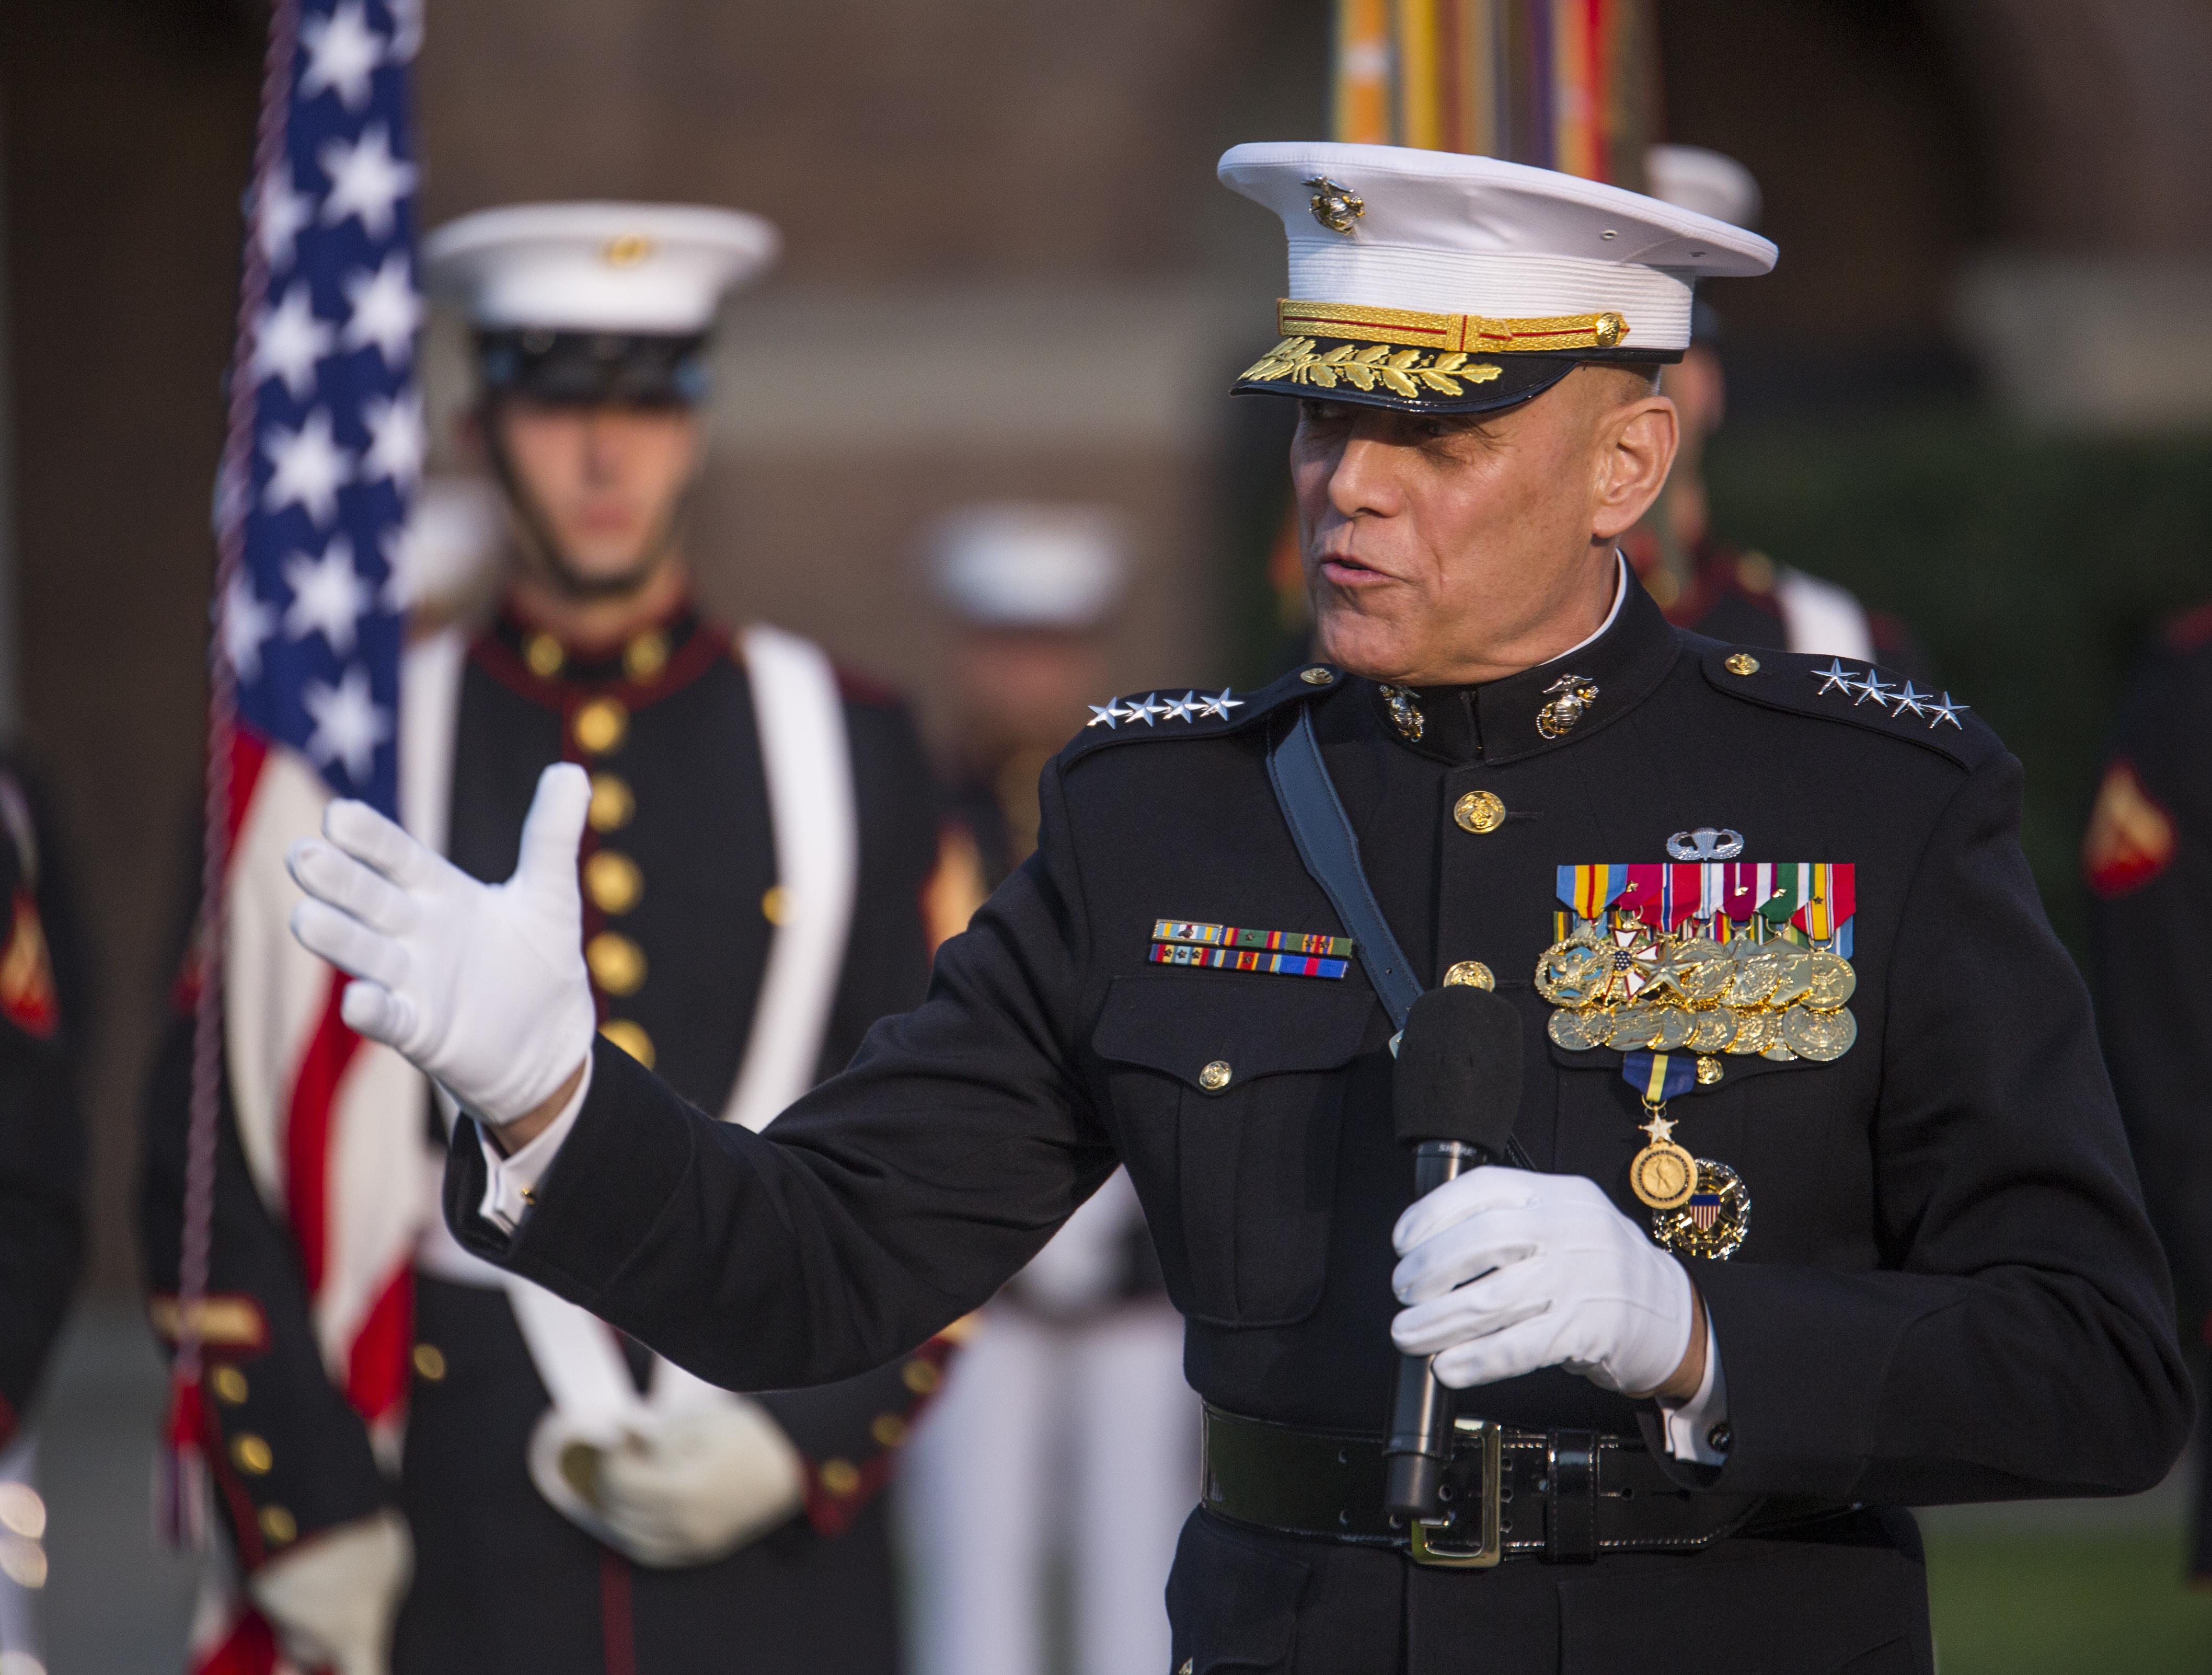 Gen. John Paxton Retirement Ceremony | Aug. 4, 2016